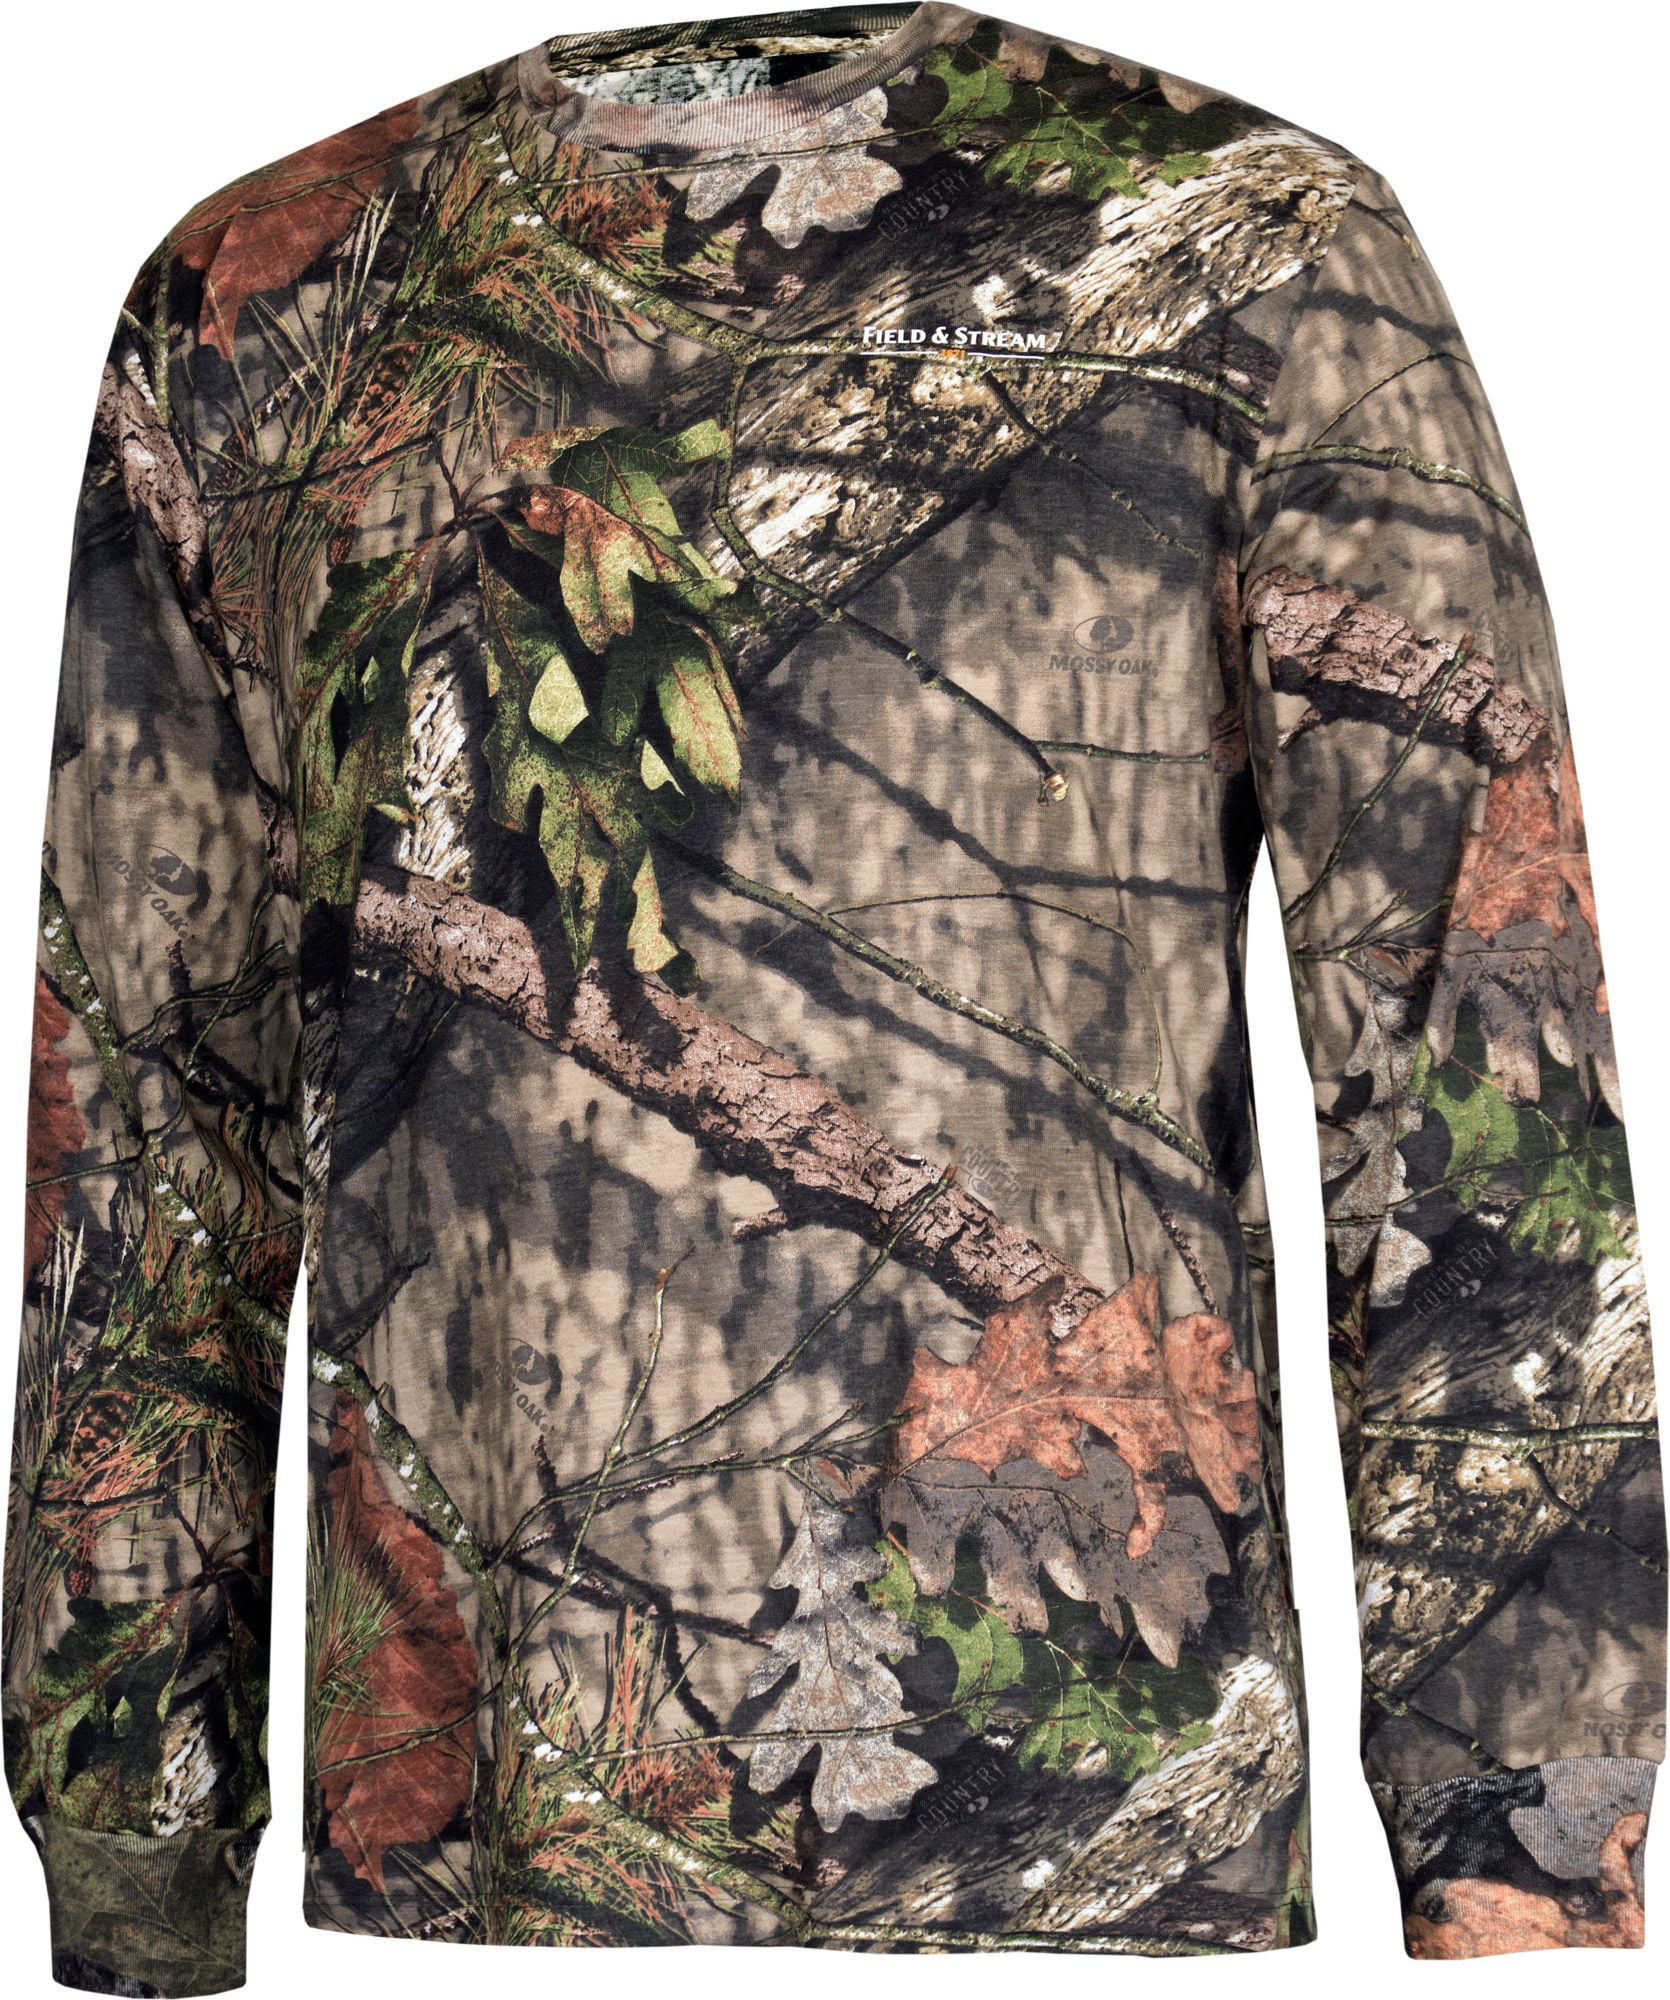 Field & Stream Mossy Oak Camo Hunting Button Up Men's Long Sleeve Shirt NEW 